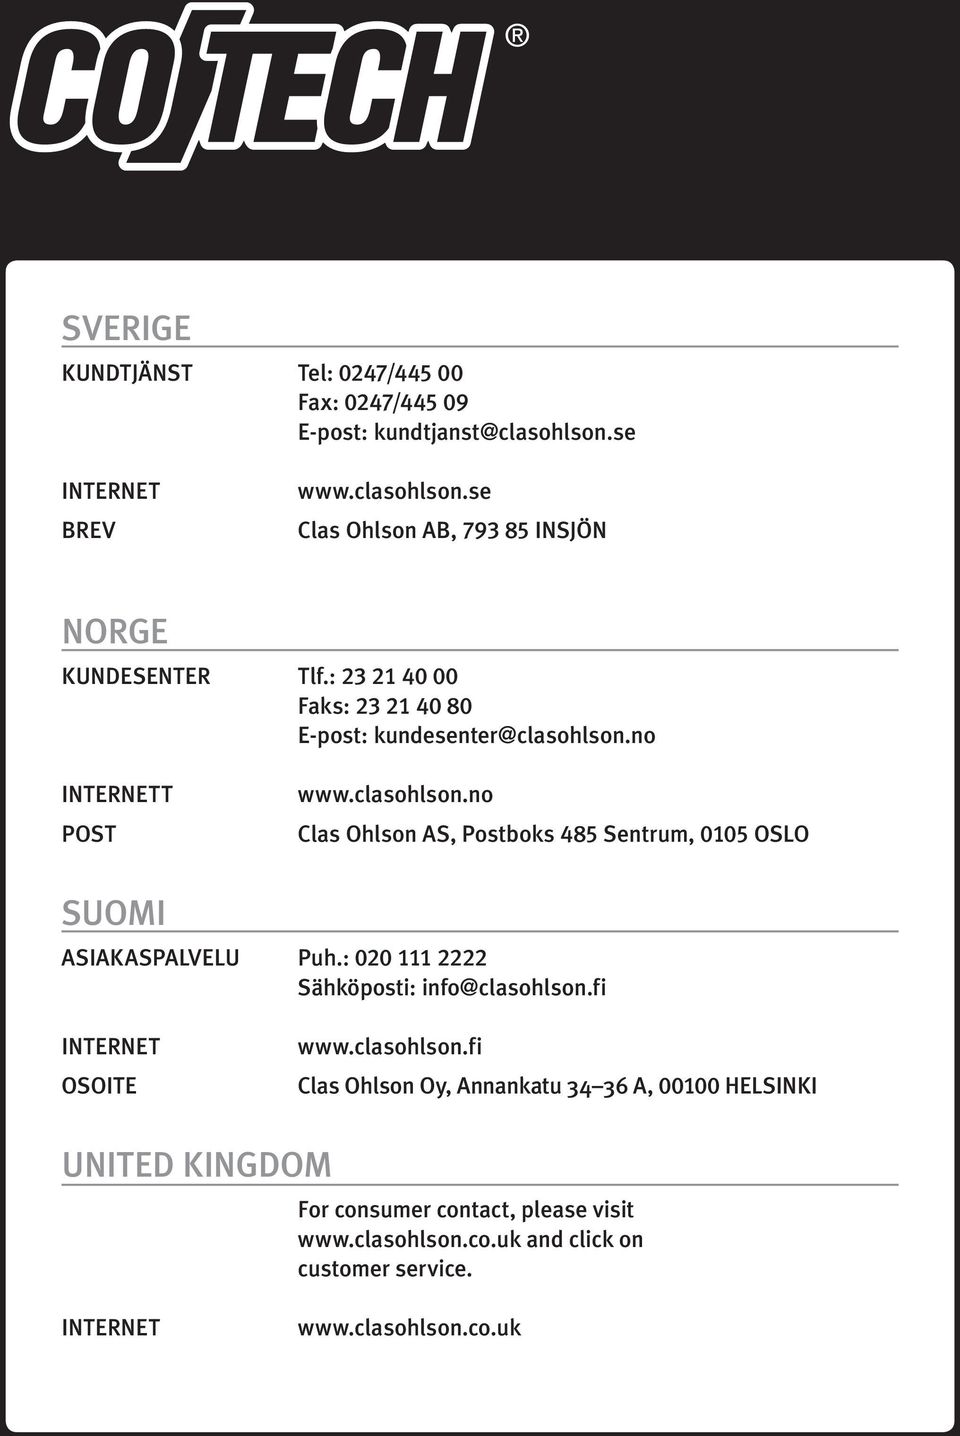 : 020 111 2222 Sähköposti: info@clasohlson.fi Internet OSOITE www.clasohlson.fi Clas Ohlson Oy, Annankatu 34 36 A, 00100 HELSINKI UNITED KINGDOM For consumer contact, please visit www.